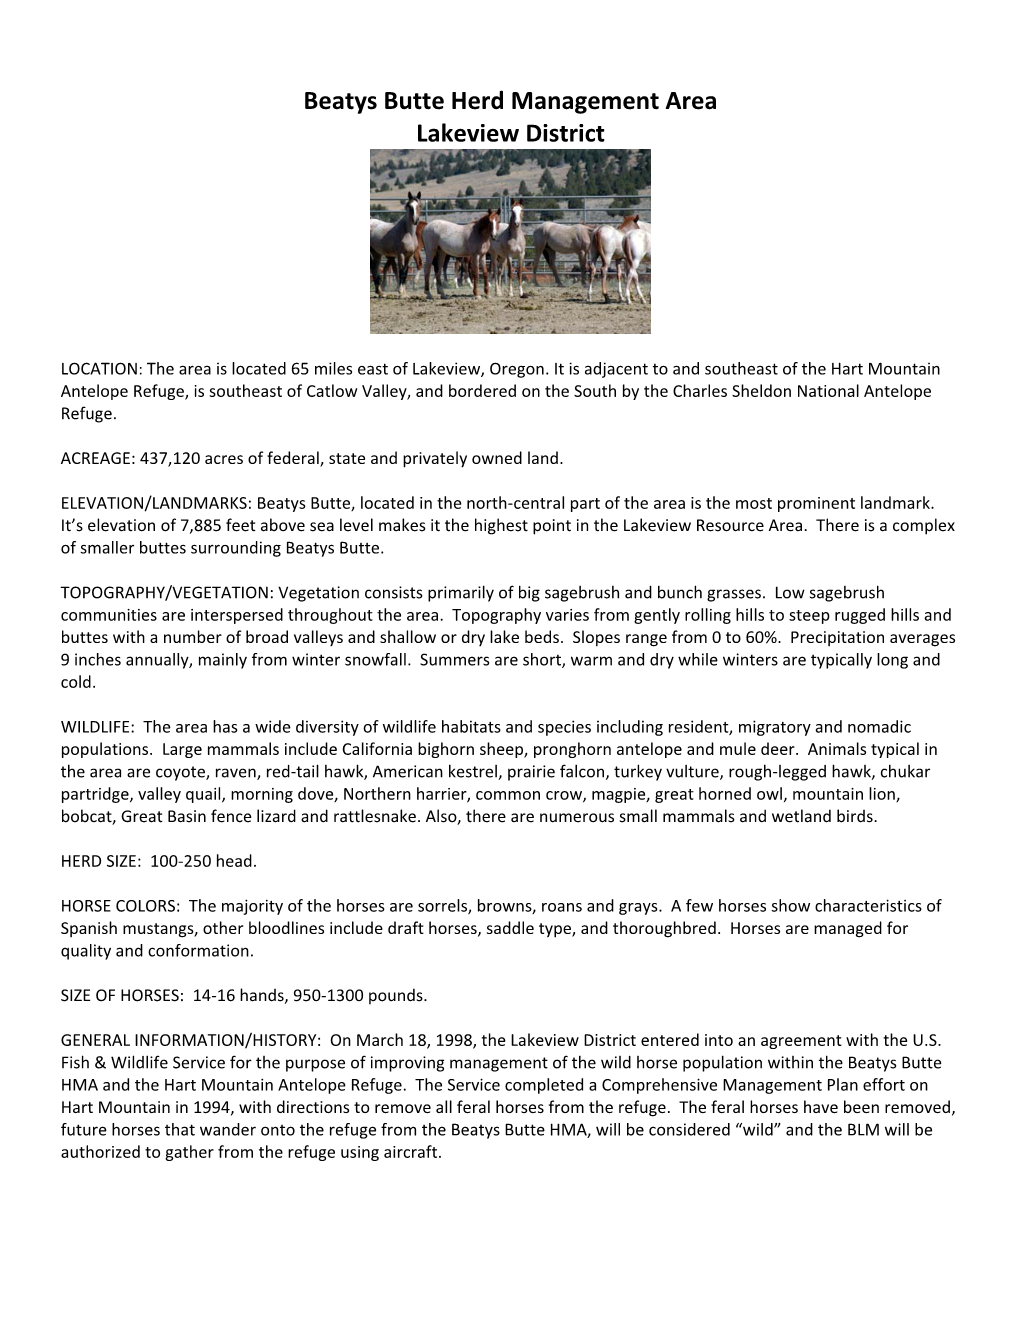 Beatys Butte Herd Management Area Description